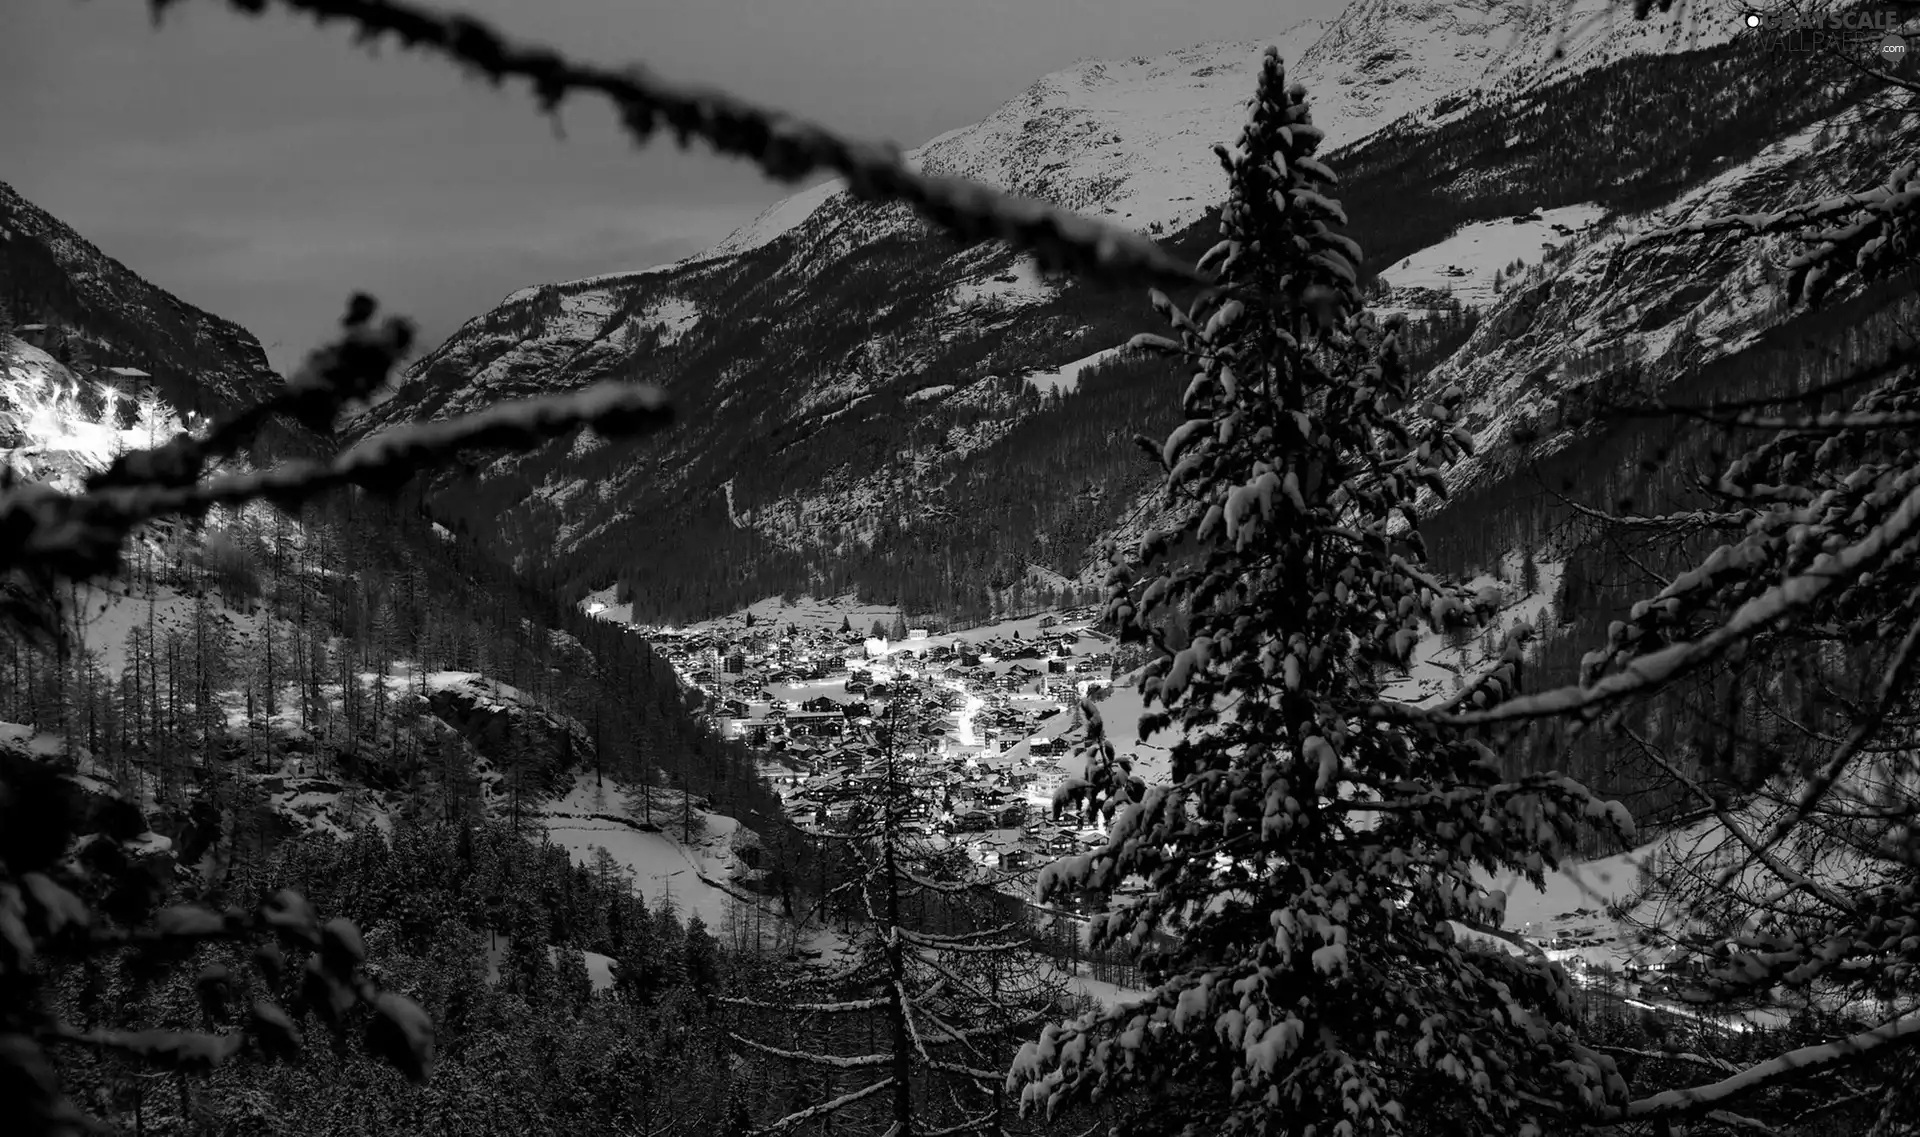 Switzerland, Mountains, Night, Houses, winter, Alps